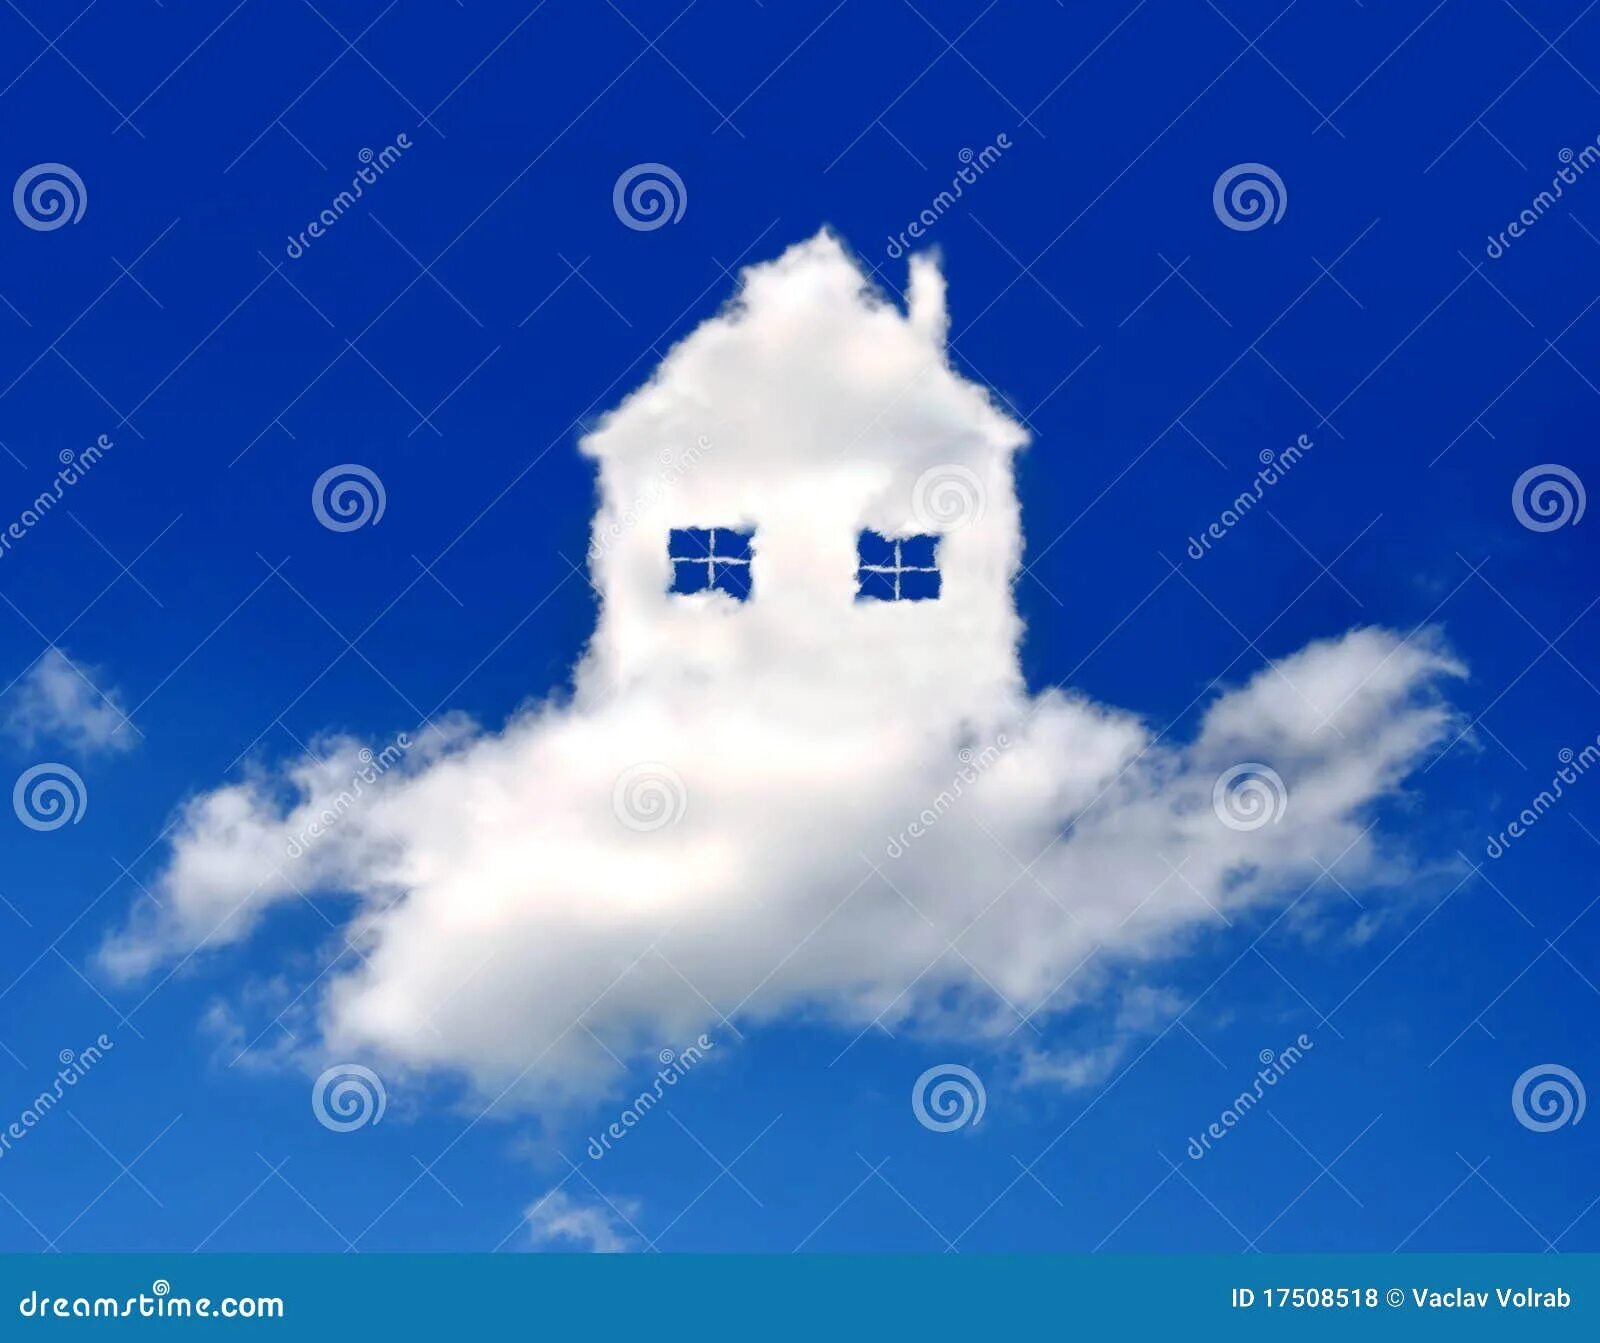 Белые облака и дом. Дом в облаках. Домик из облаков. Облака в виде дома. Облака в виде домика.